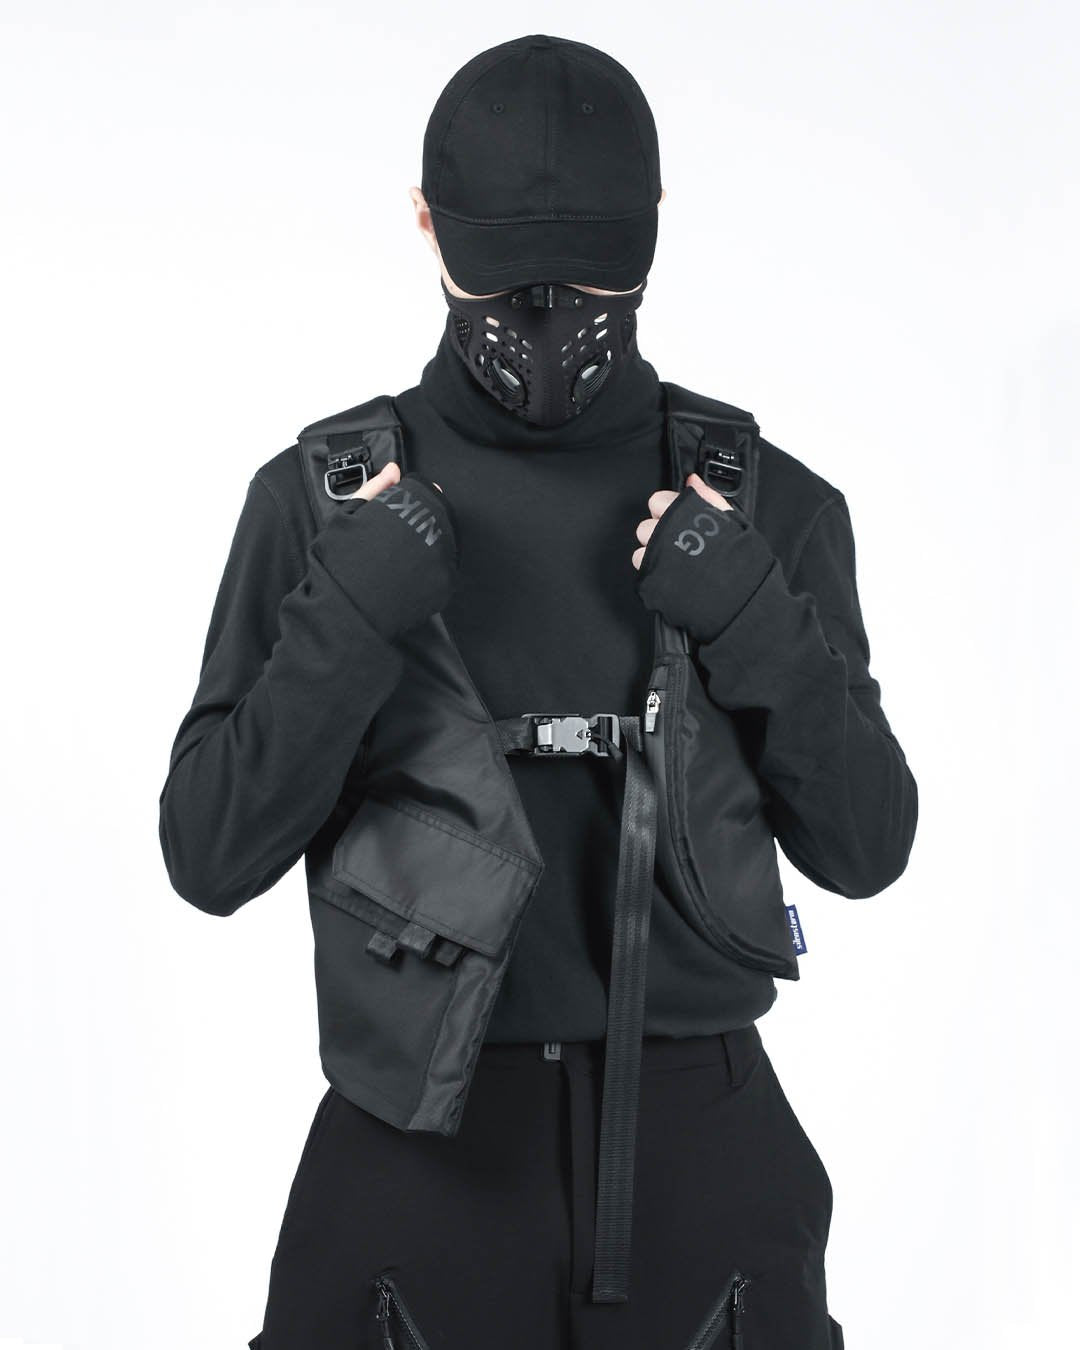 black tactical vest